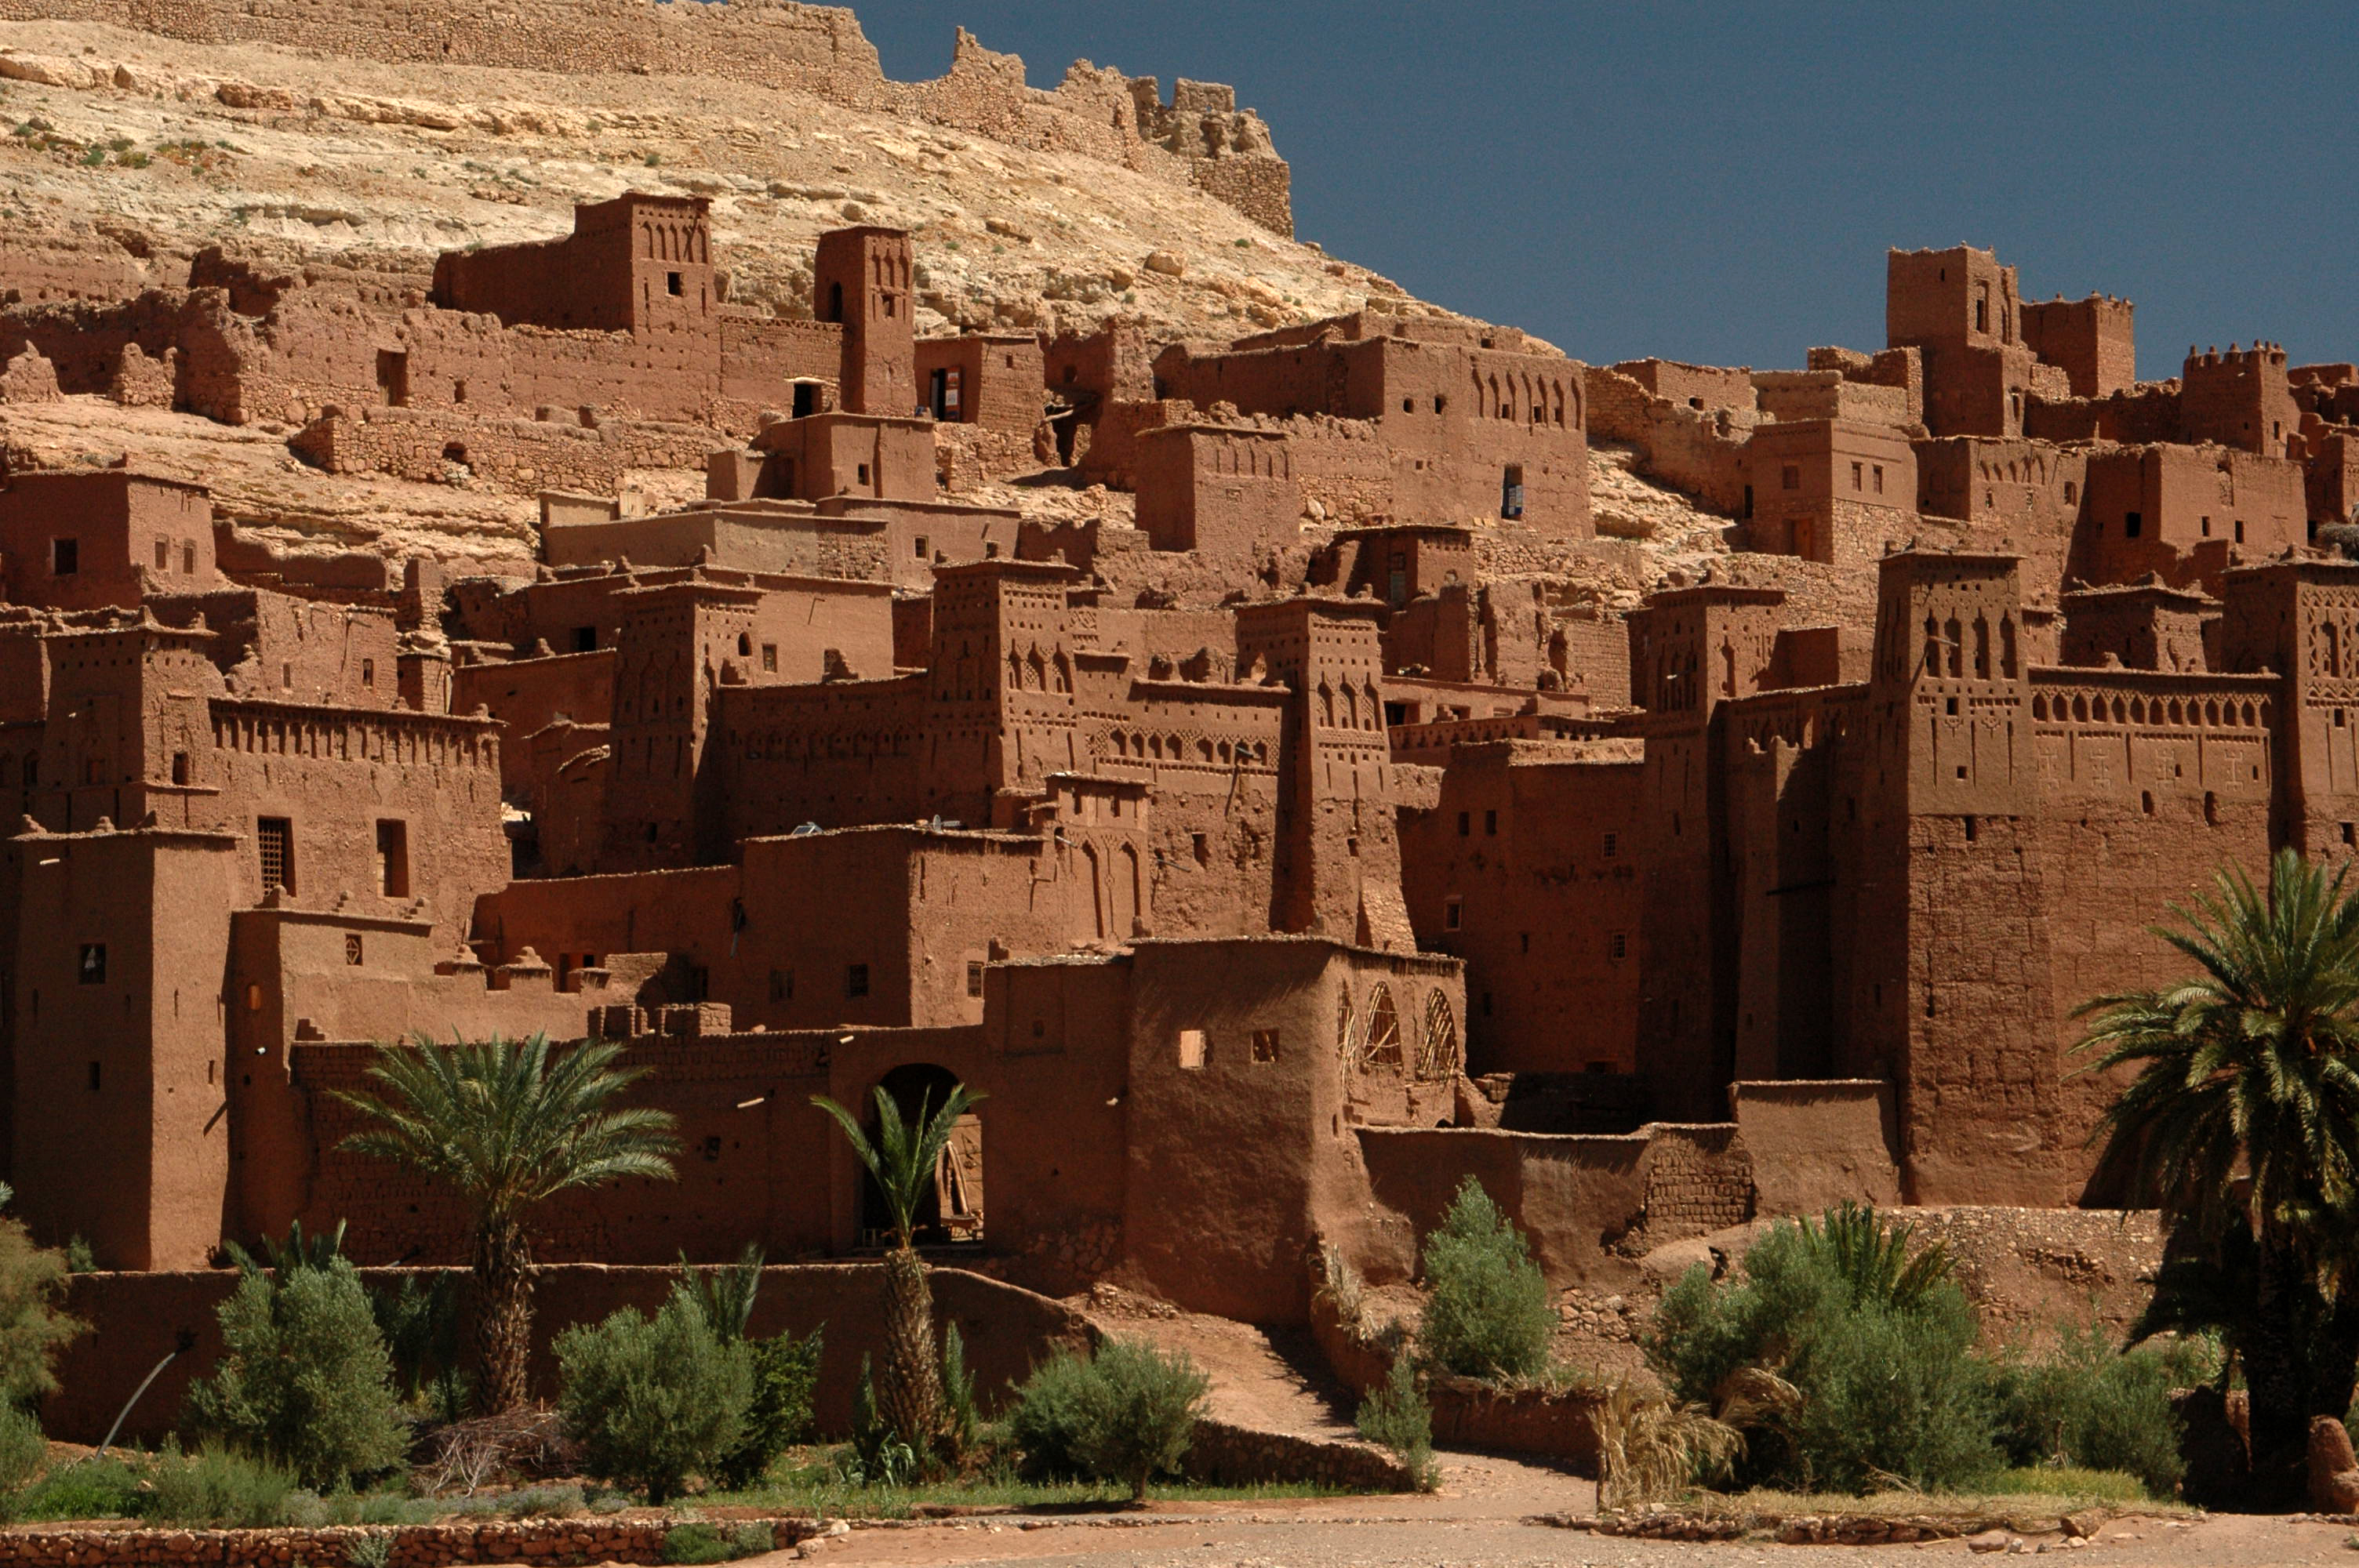 Ait-Ben-Haddou - ufortyfikowana osada (ksar) w Maroku